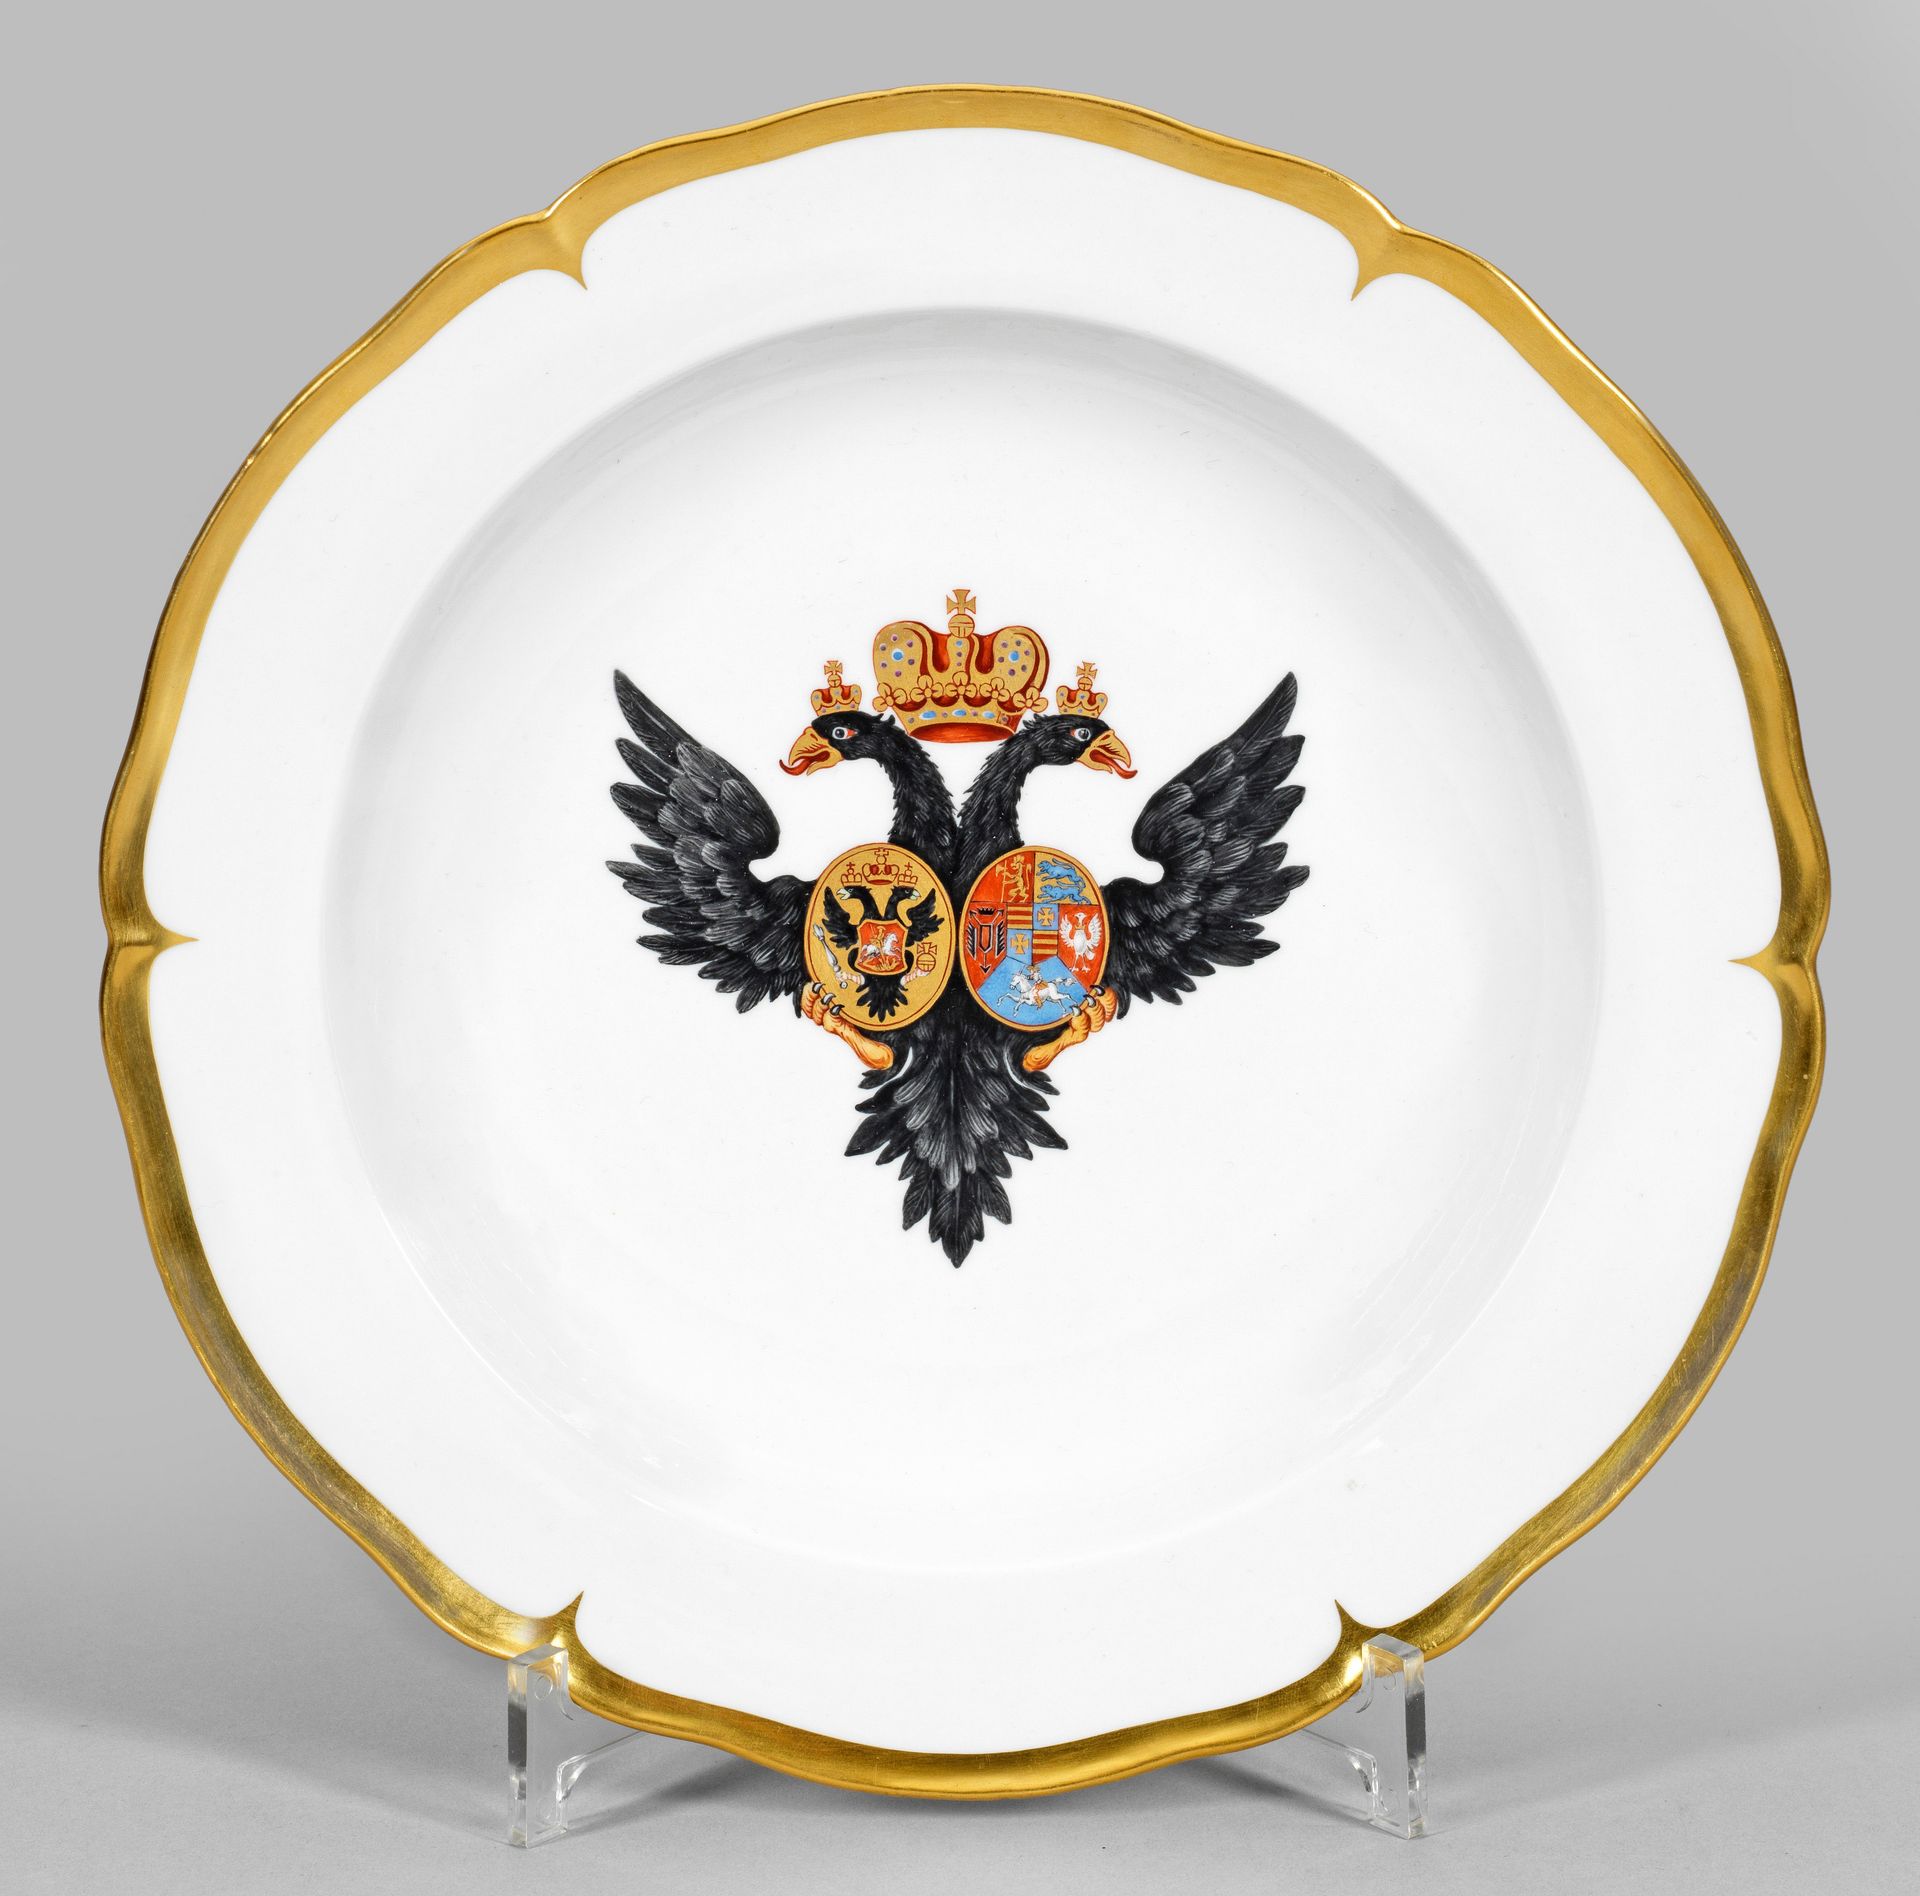 Null 俄罗斯沙皇保罗一世拥有的 KPM Berlin 大型纹章盘
金边。中央凹陷处有一只俄罗斯帝国的双头鹰，上面有罗曼诺夫家族和荷尔斯泰因-戈托普家族的联盟&hellip;